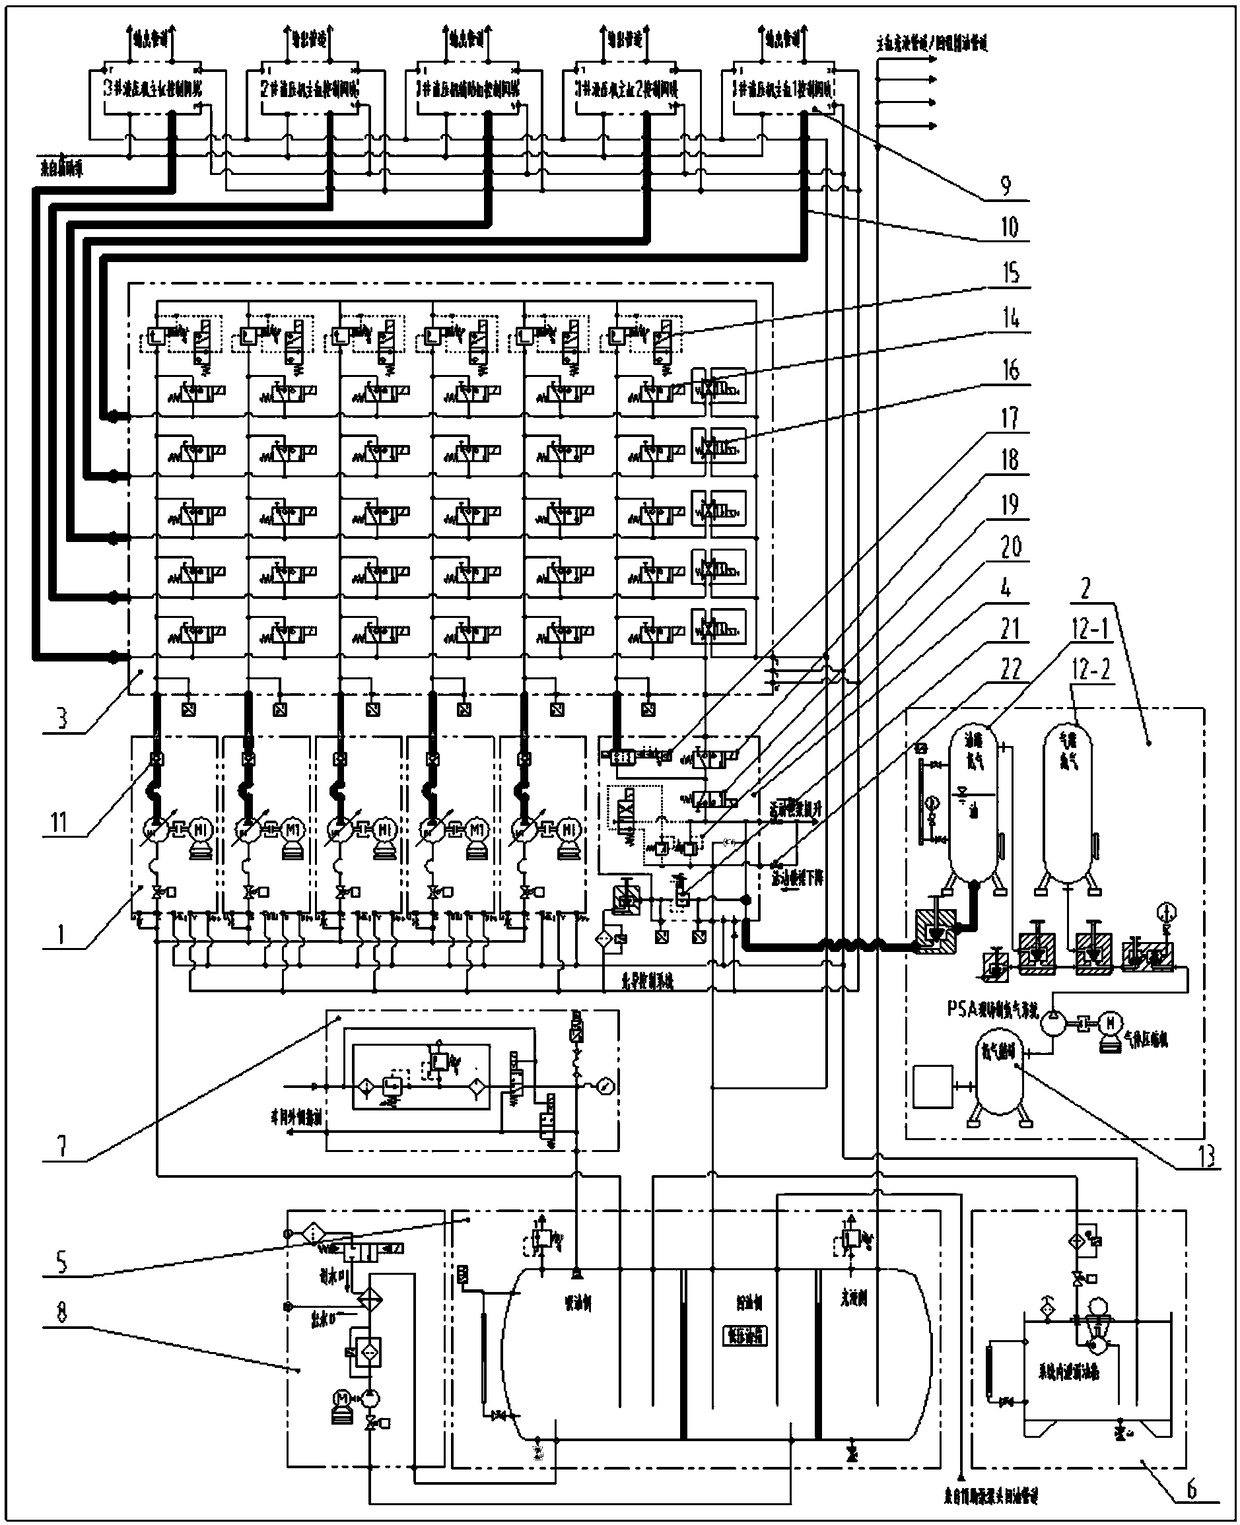 Matrix type multi-channel input/output integrated control valve block